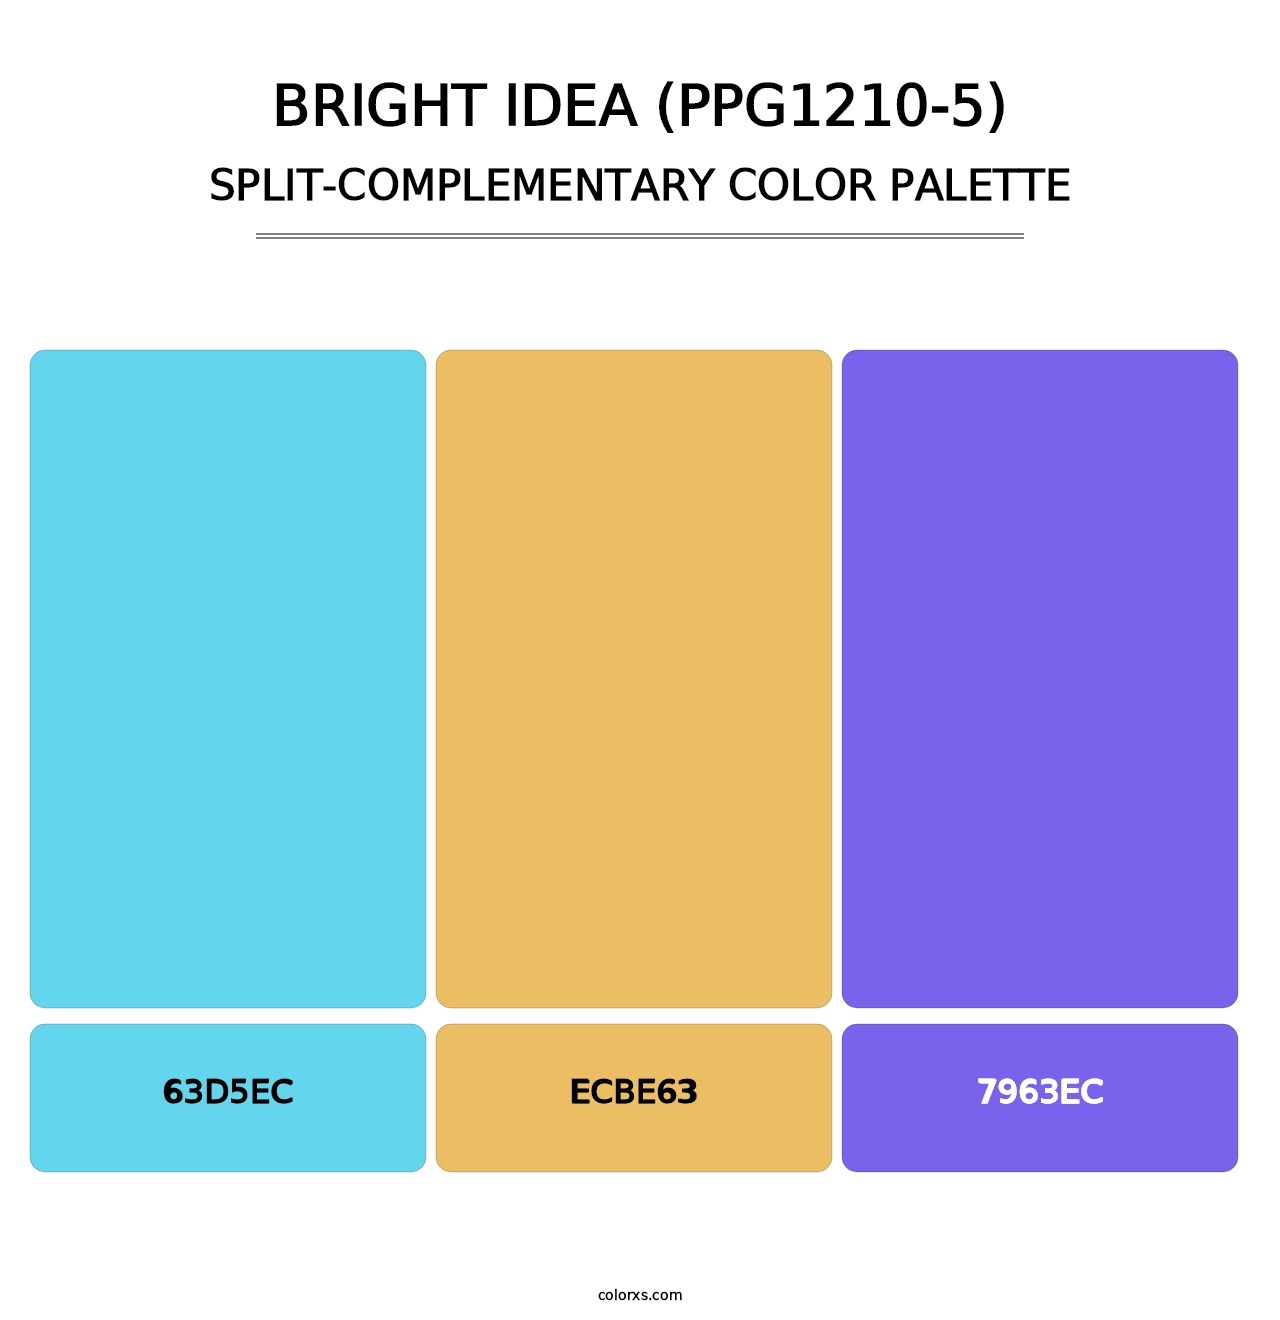 Bright Idea (PPG1210-5) - Split-Complementary Color Palette